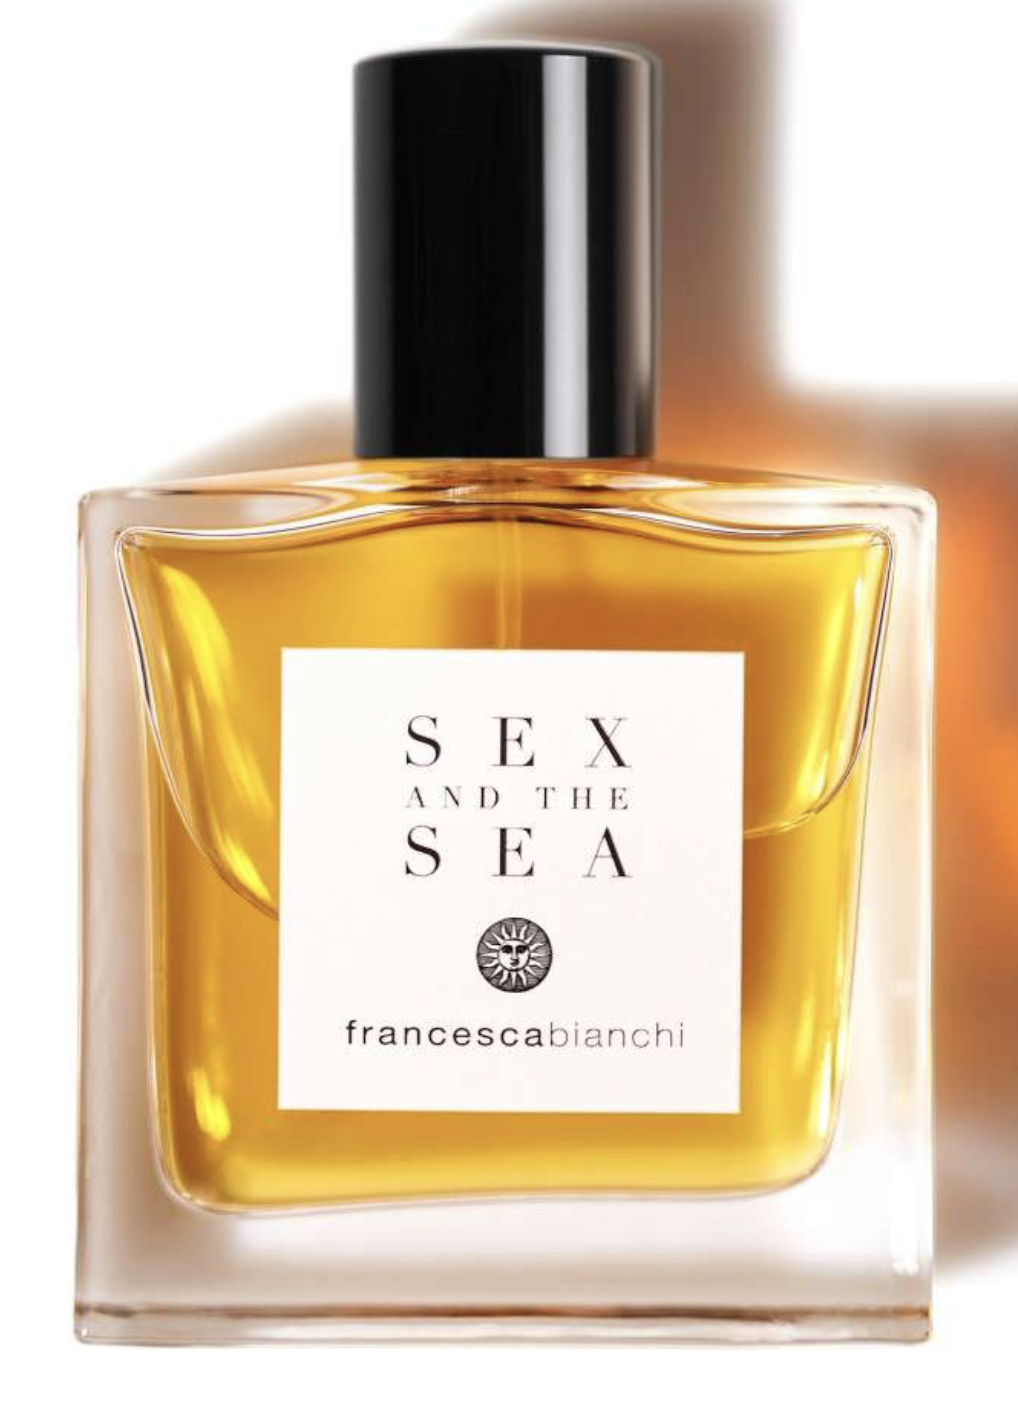 FRANCESCA BIANCHI SEX AND THE SEA EXTRAIT DE PARFUM 30ML SPRAY